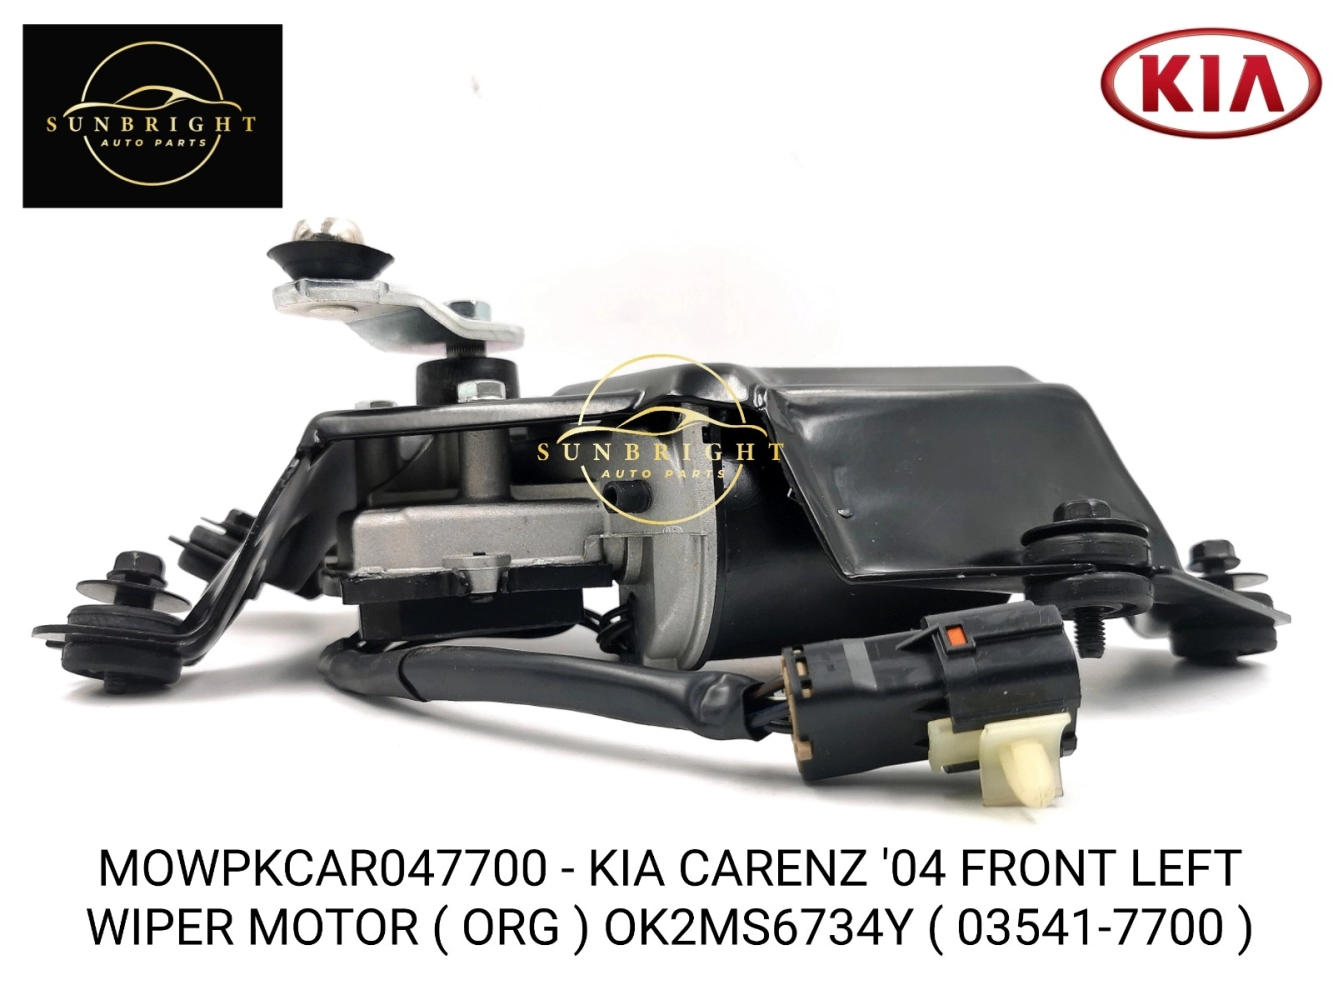 MOWPKCAR047700 - KIA CARENZ '04 FRONT LEFT WIPER MOTOR ( ORG ) OK2MS6734Y ( 03541-7700 )